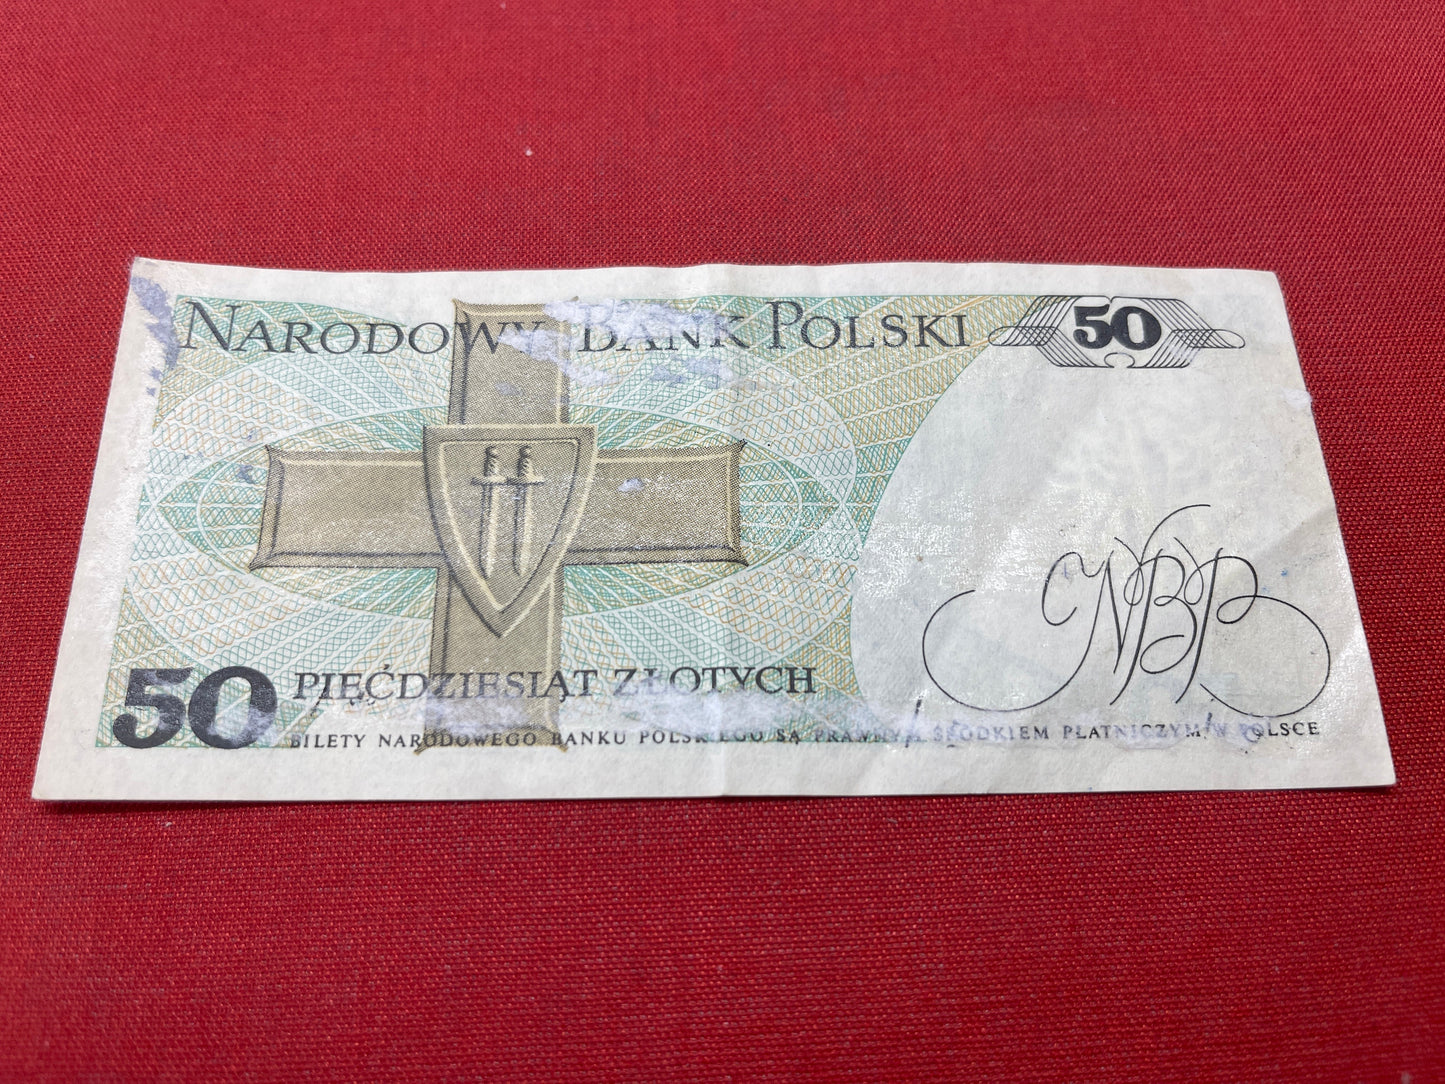 Bank Polski Narodowy50 Zlotych Serial HT 7291284 1988